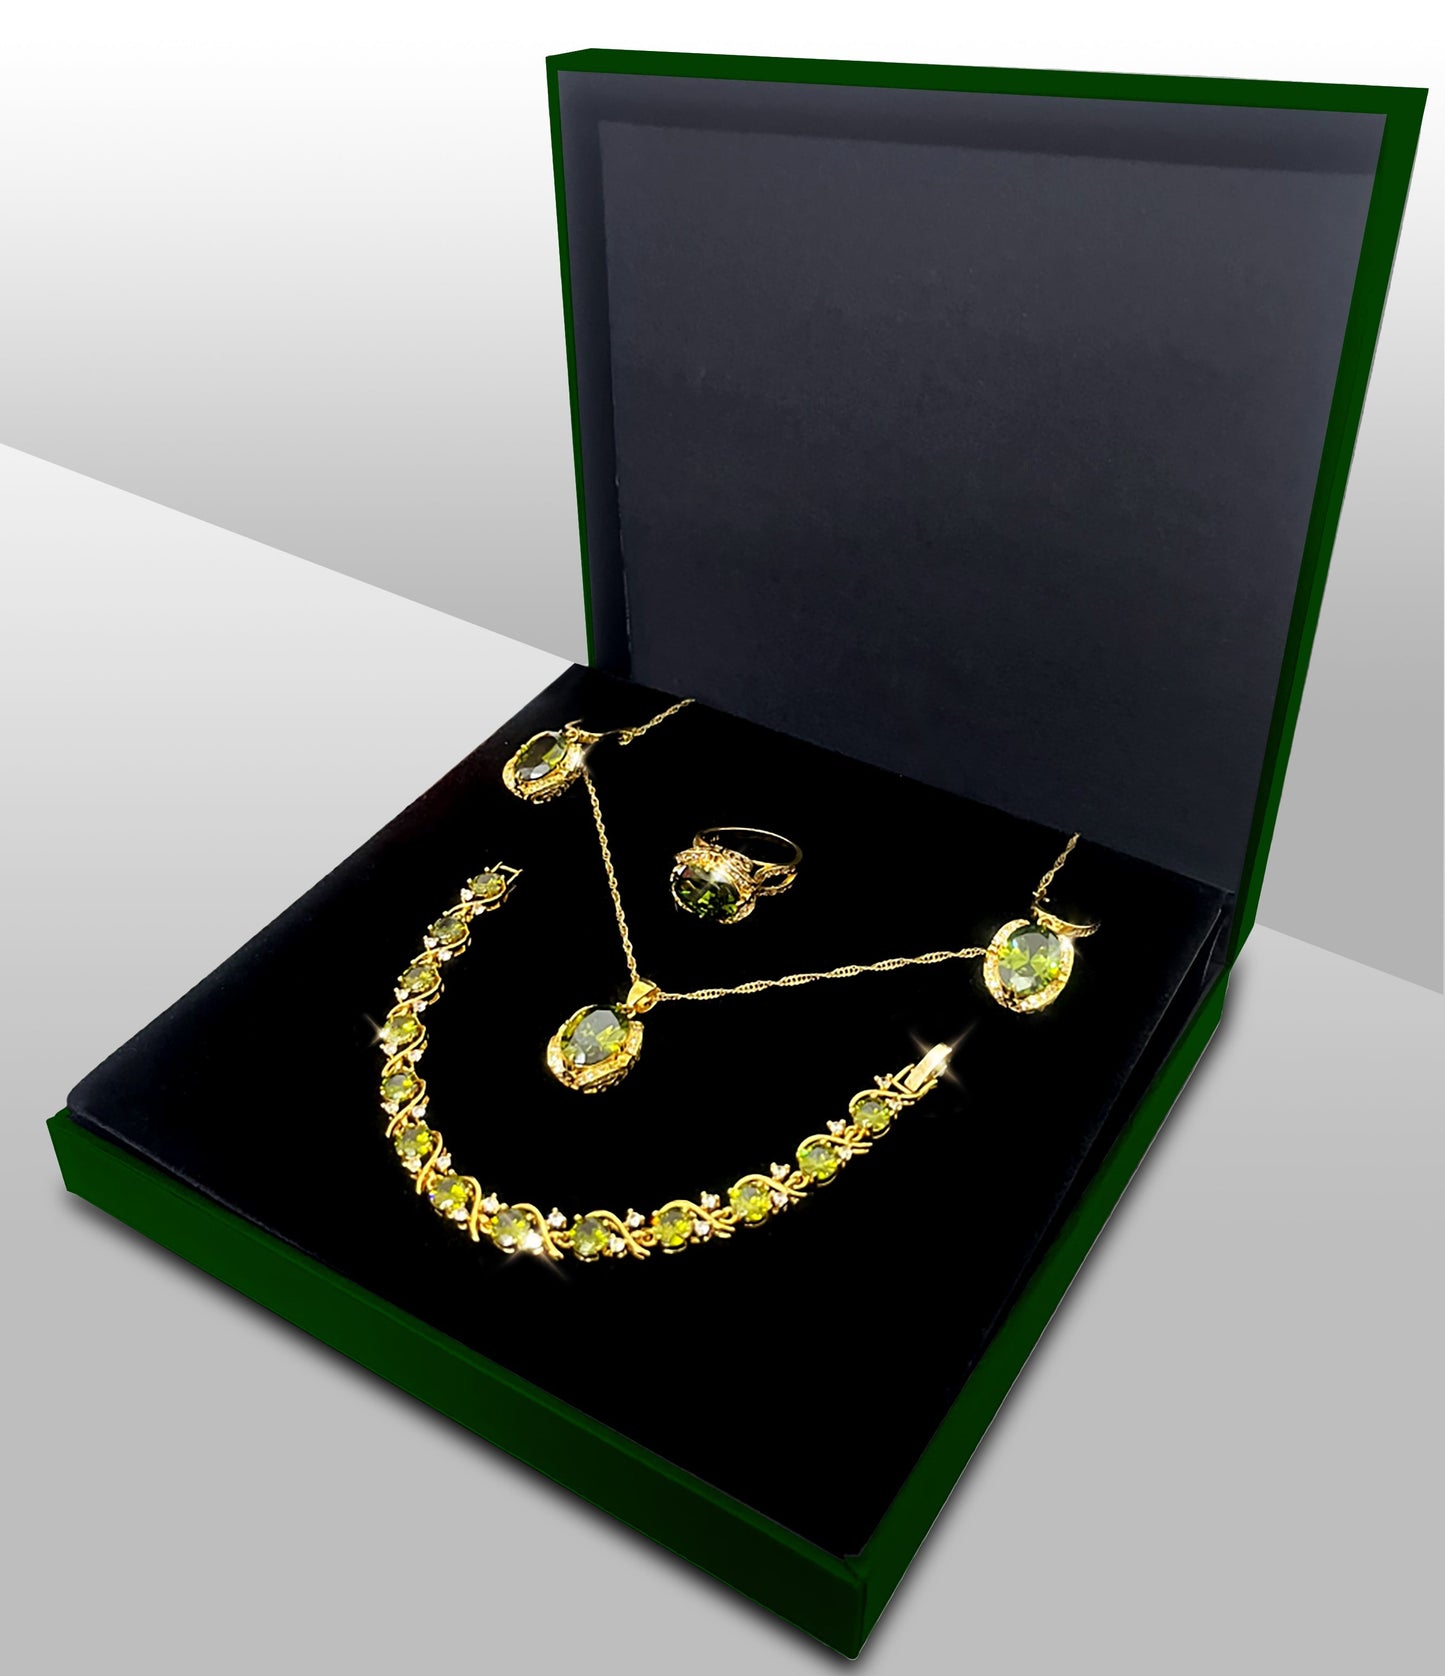 Luxury Green/Red Zircon 925 Silver Jewelry Set